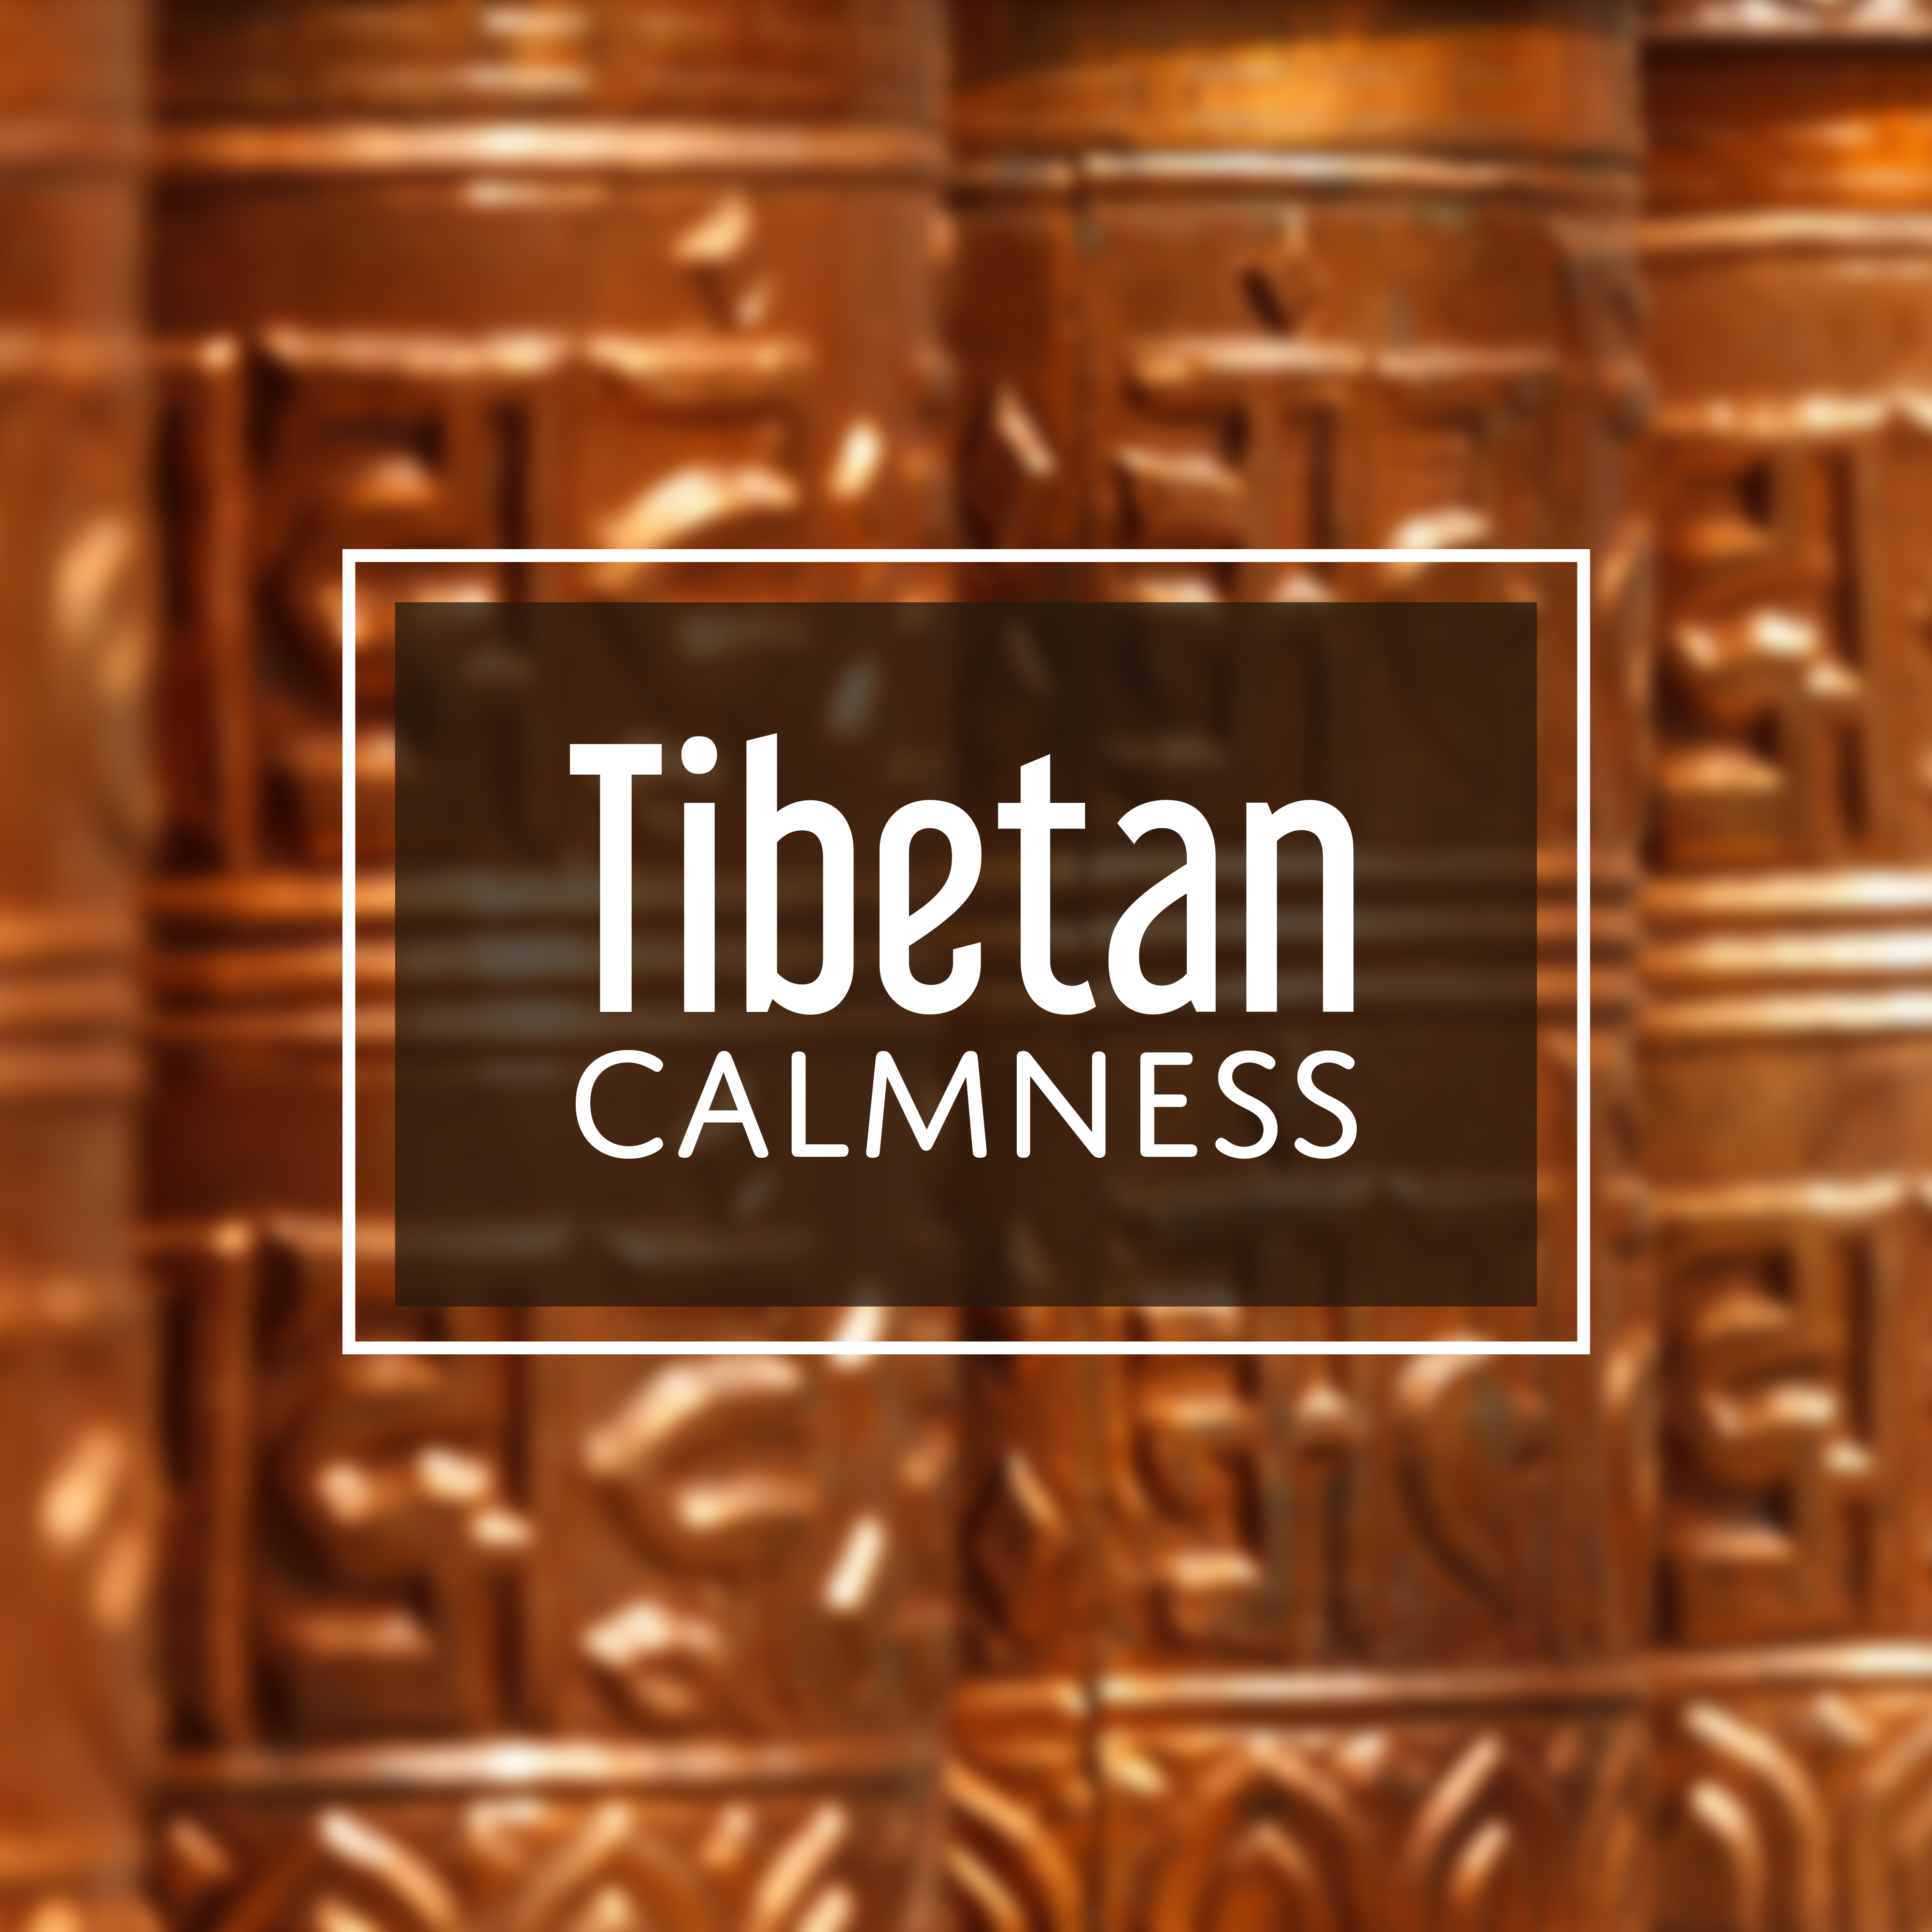 Tibetan Calmness